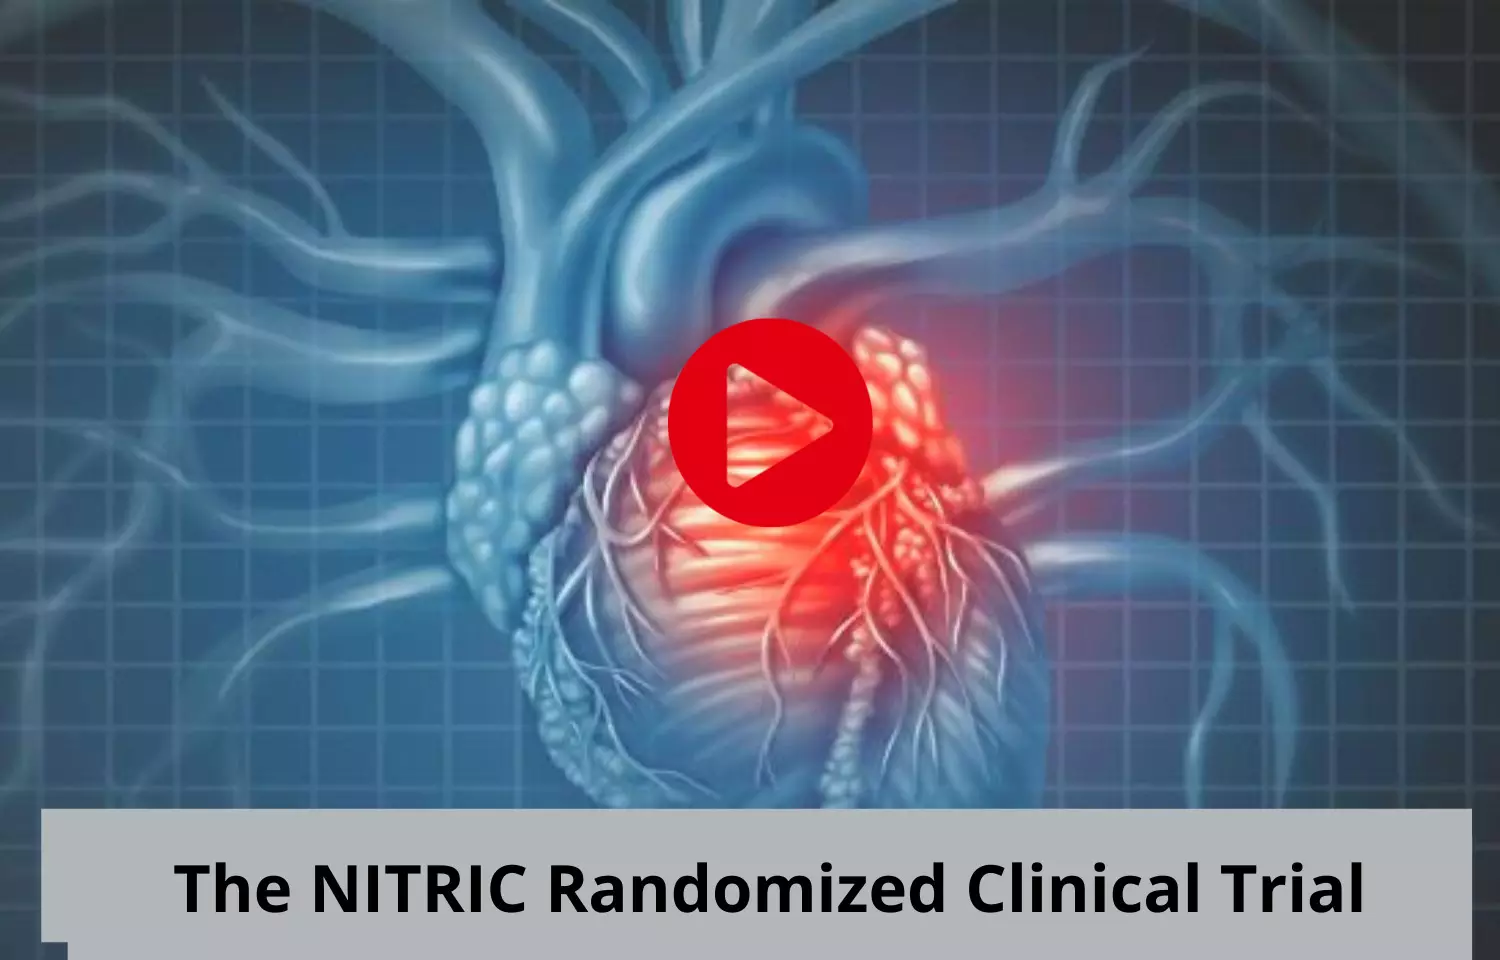 The NITRIC Randomized Clinical Trial